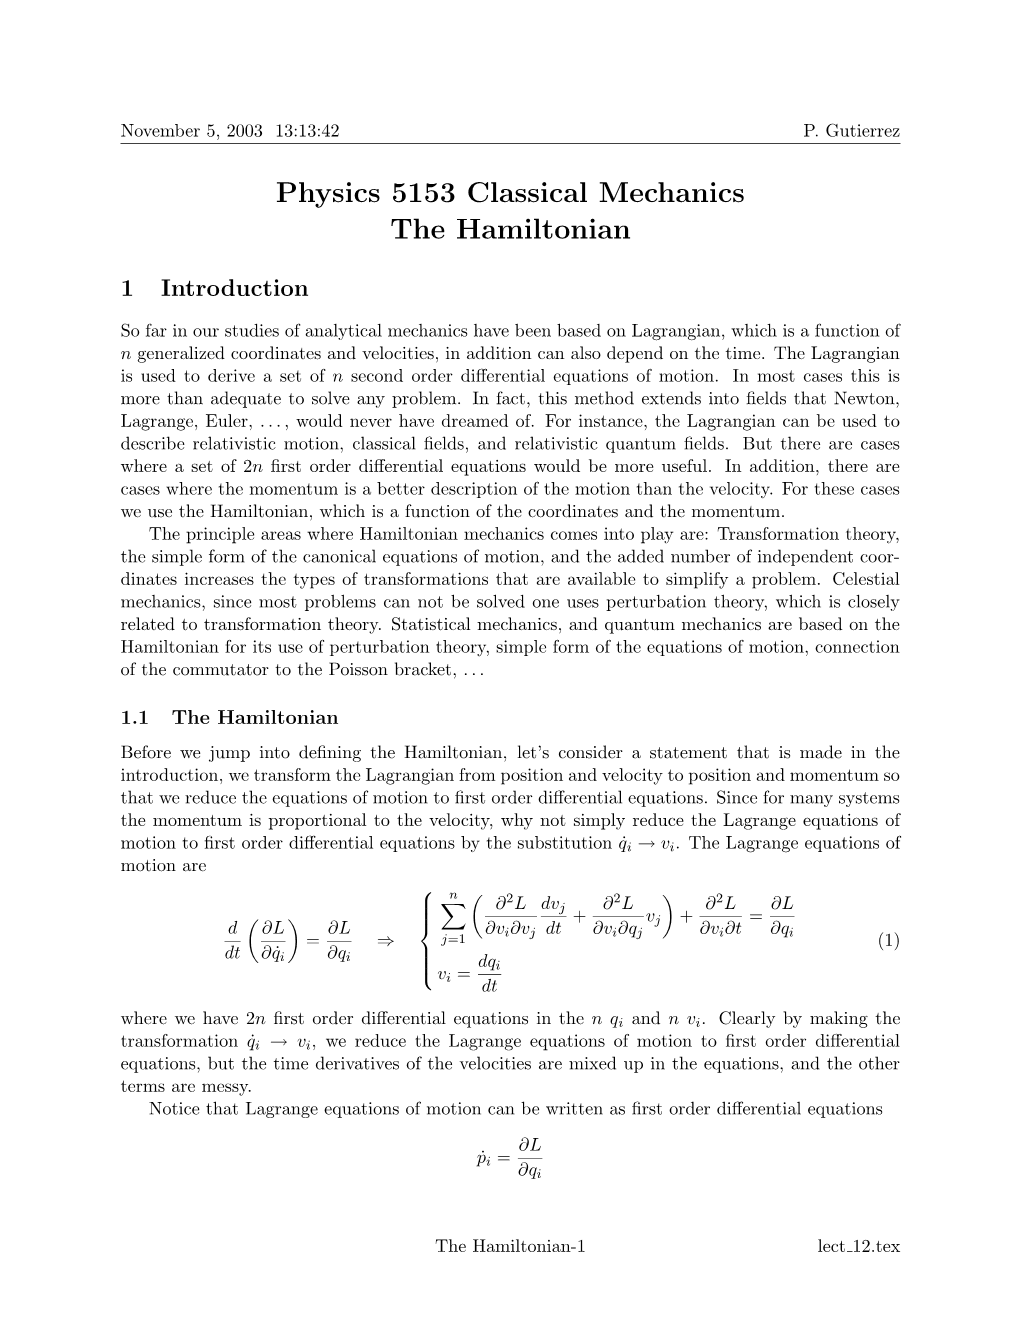 Physics 5153 Classical Mechanics the Hamiltonian